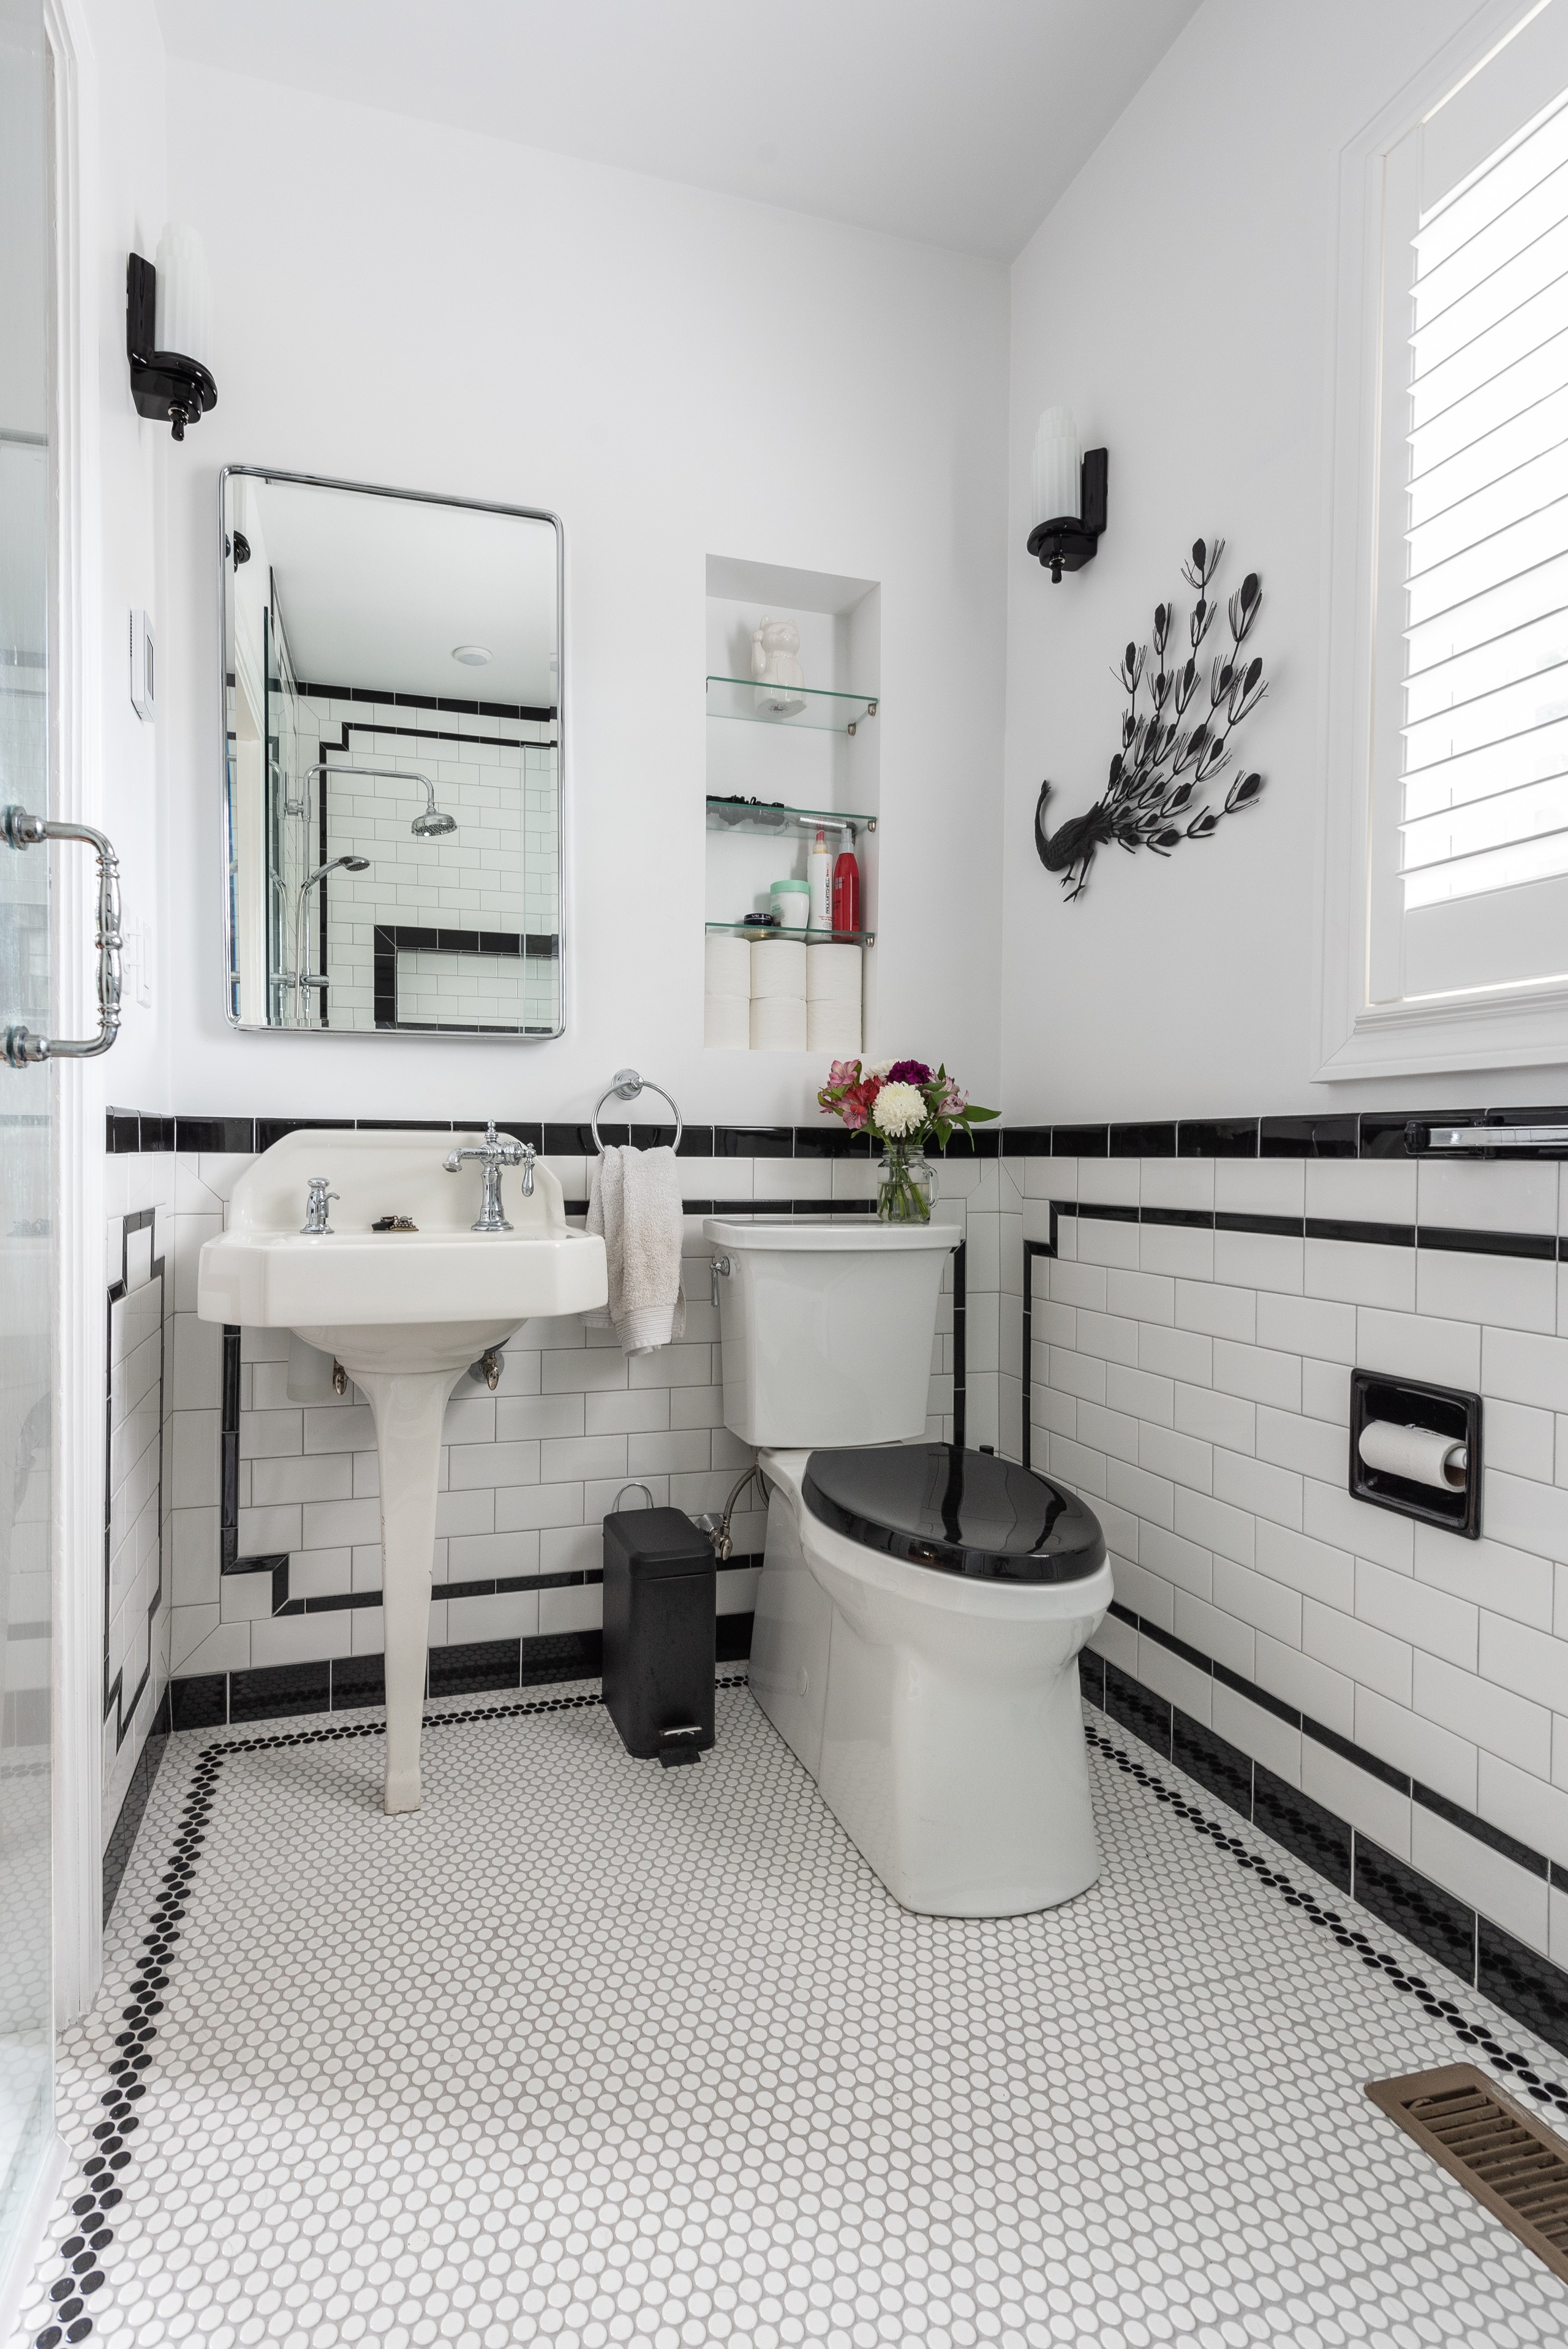 https://st.hzcdn.com/simgs/pictures/bathrooms/black-and-white-art-deco-bathroom-cypress-design-co-img~8e71e2ec0d28e54a_14-7308-1-9e6c498.jpg